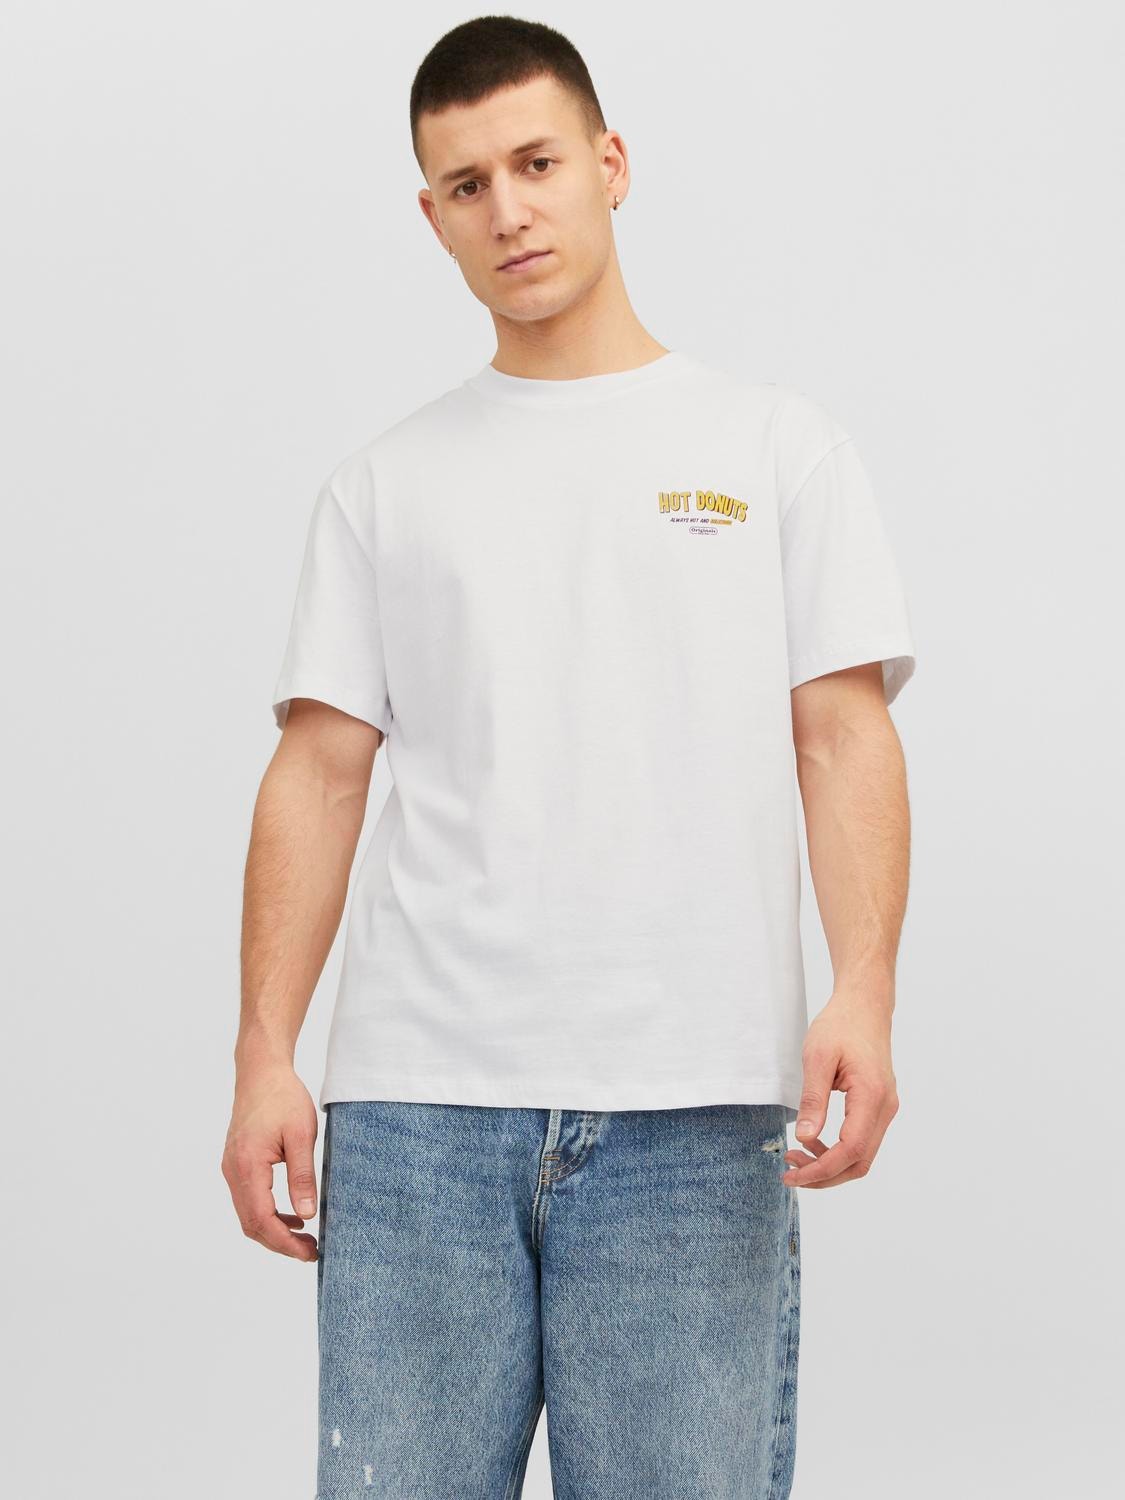 Jack & Jones Printed Crew neck T-shirt -Bright White - 12243536